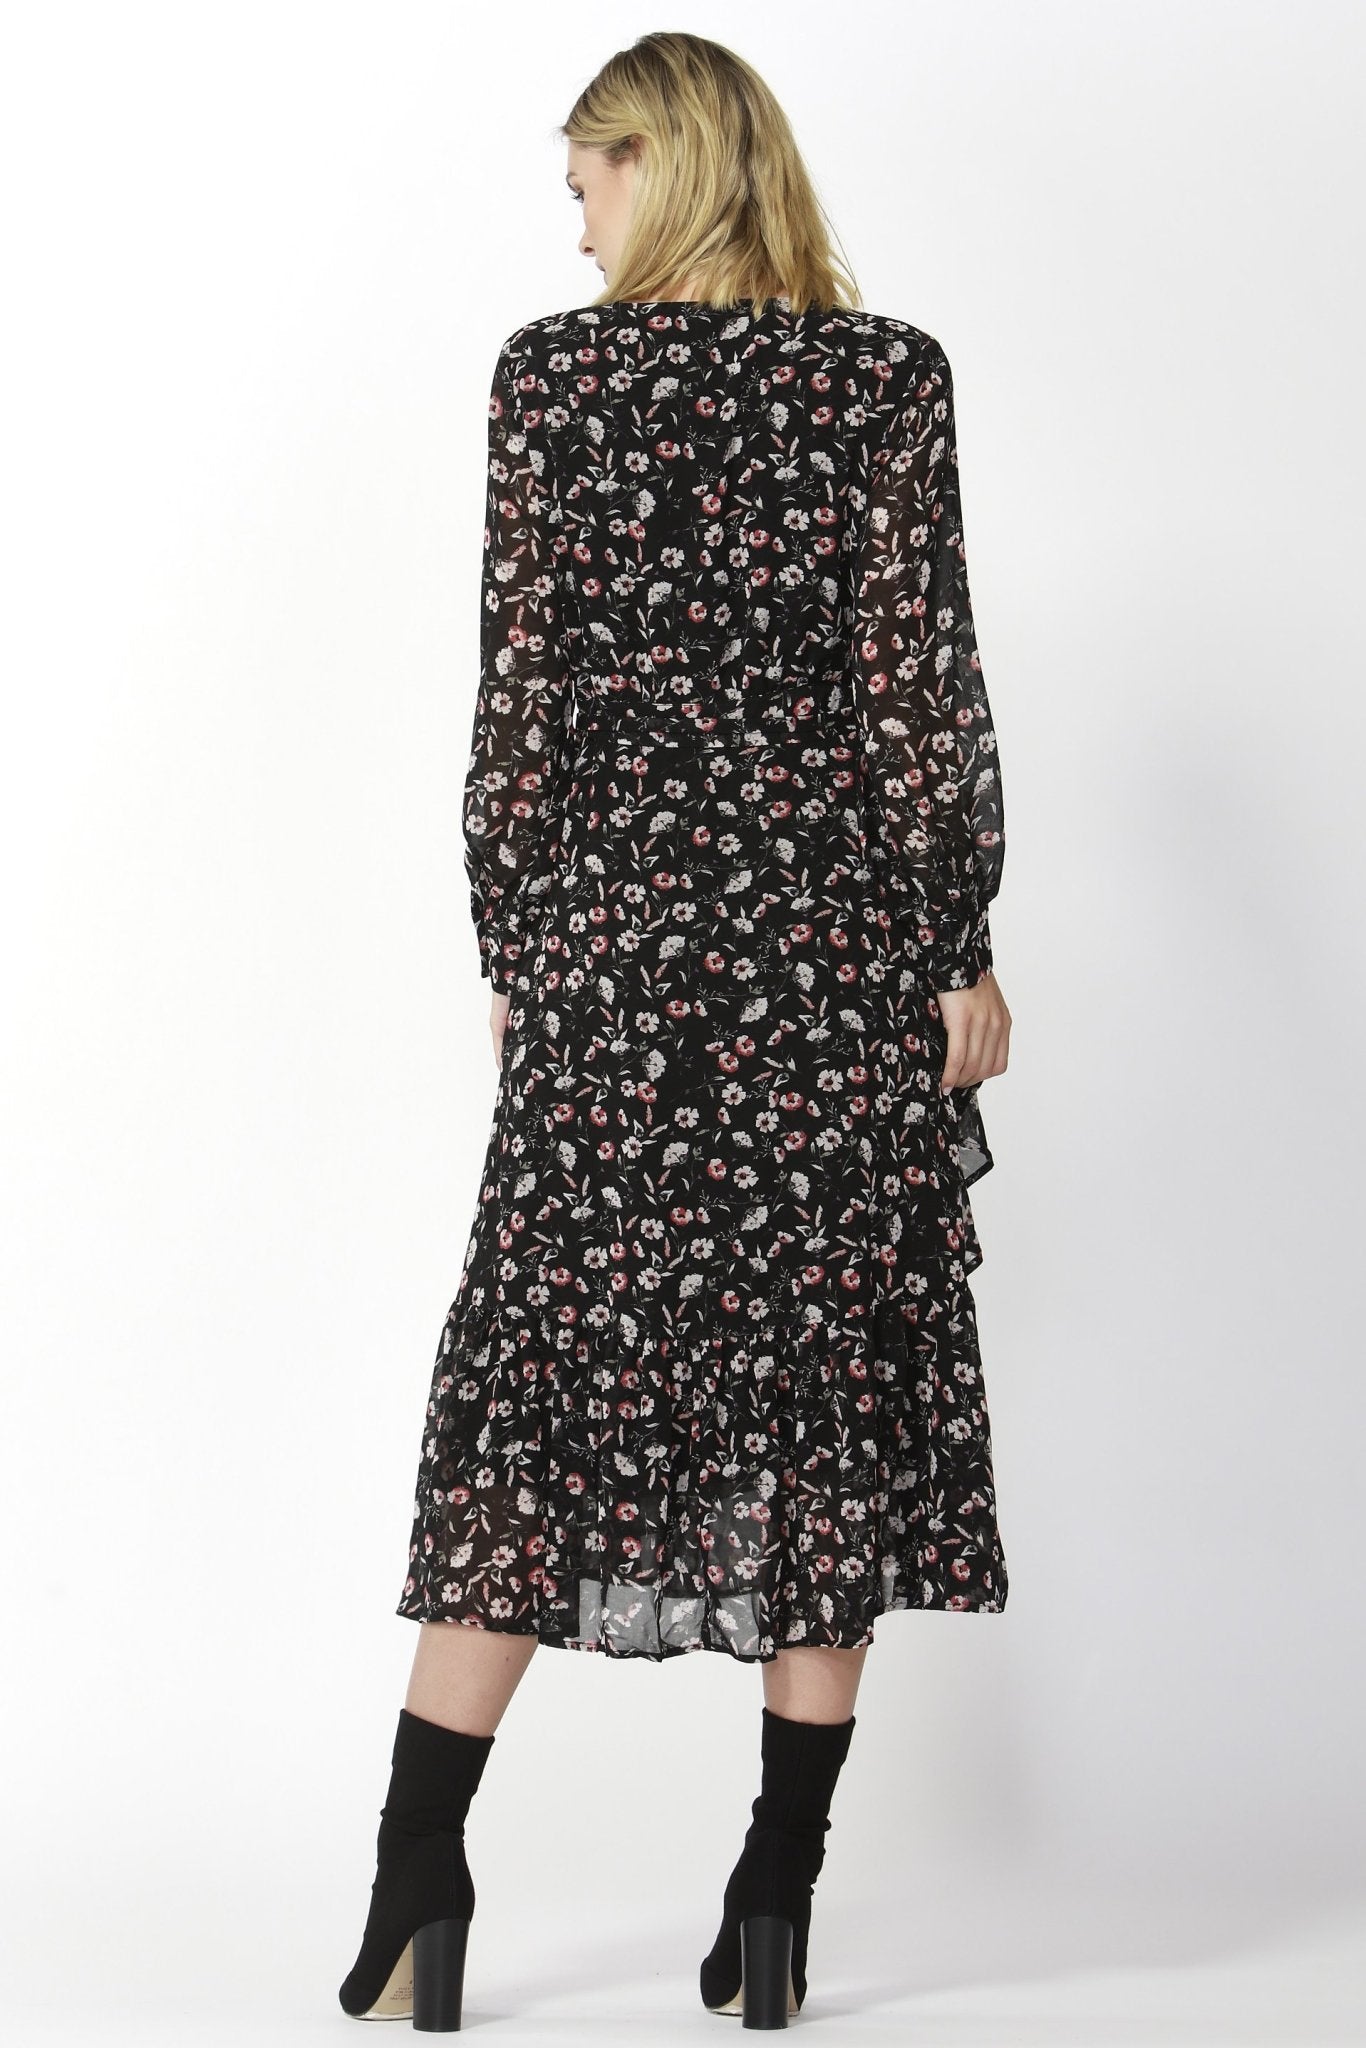 Fate + Becker Nolita Wrap Dress in Floral Print - Hey Sara